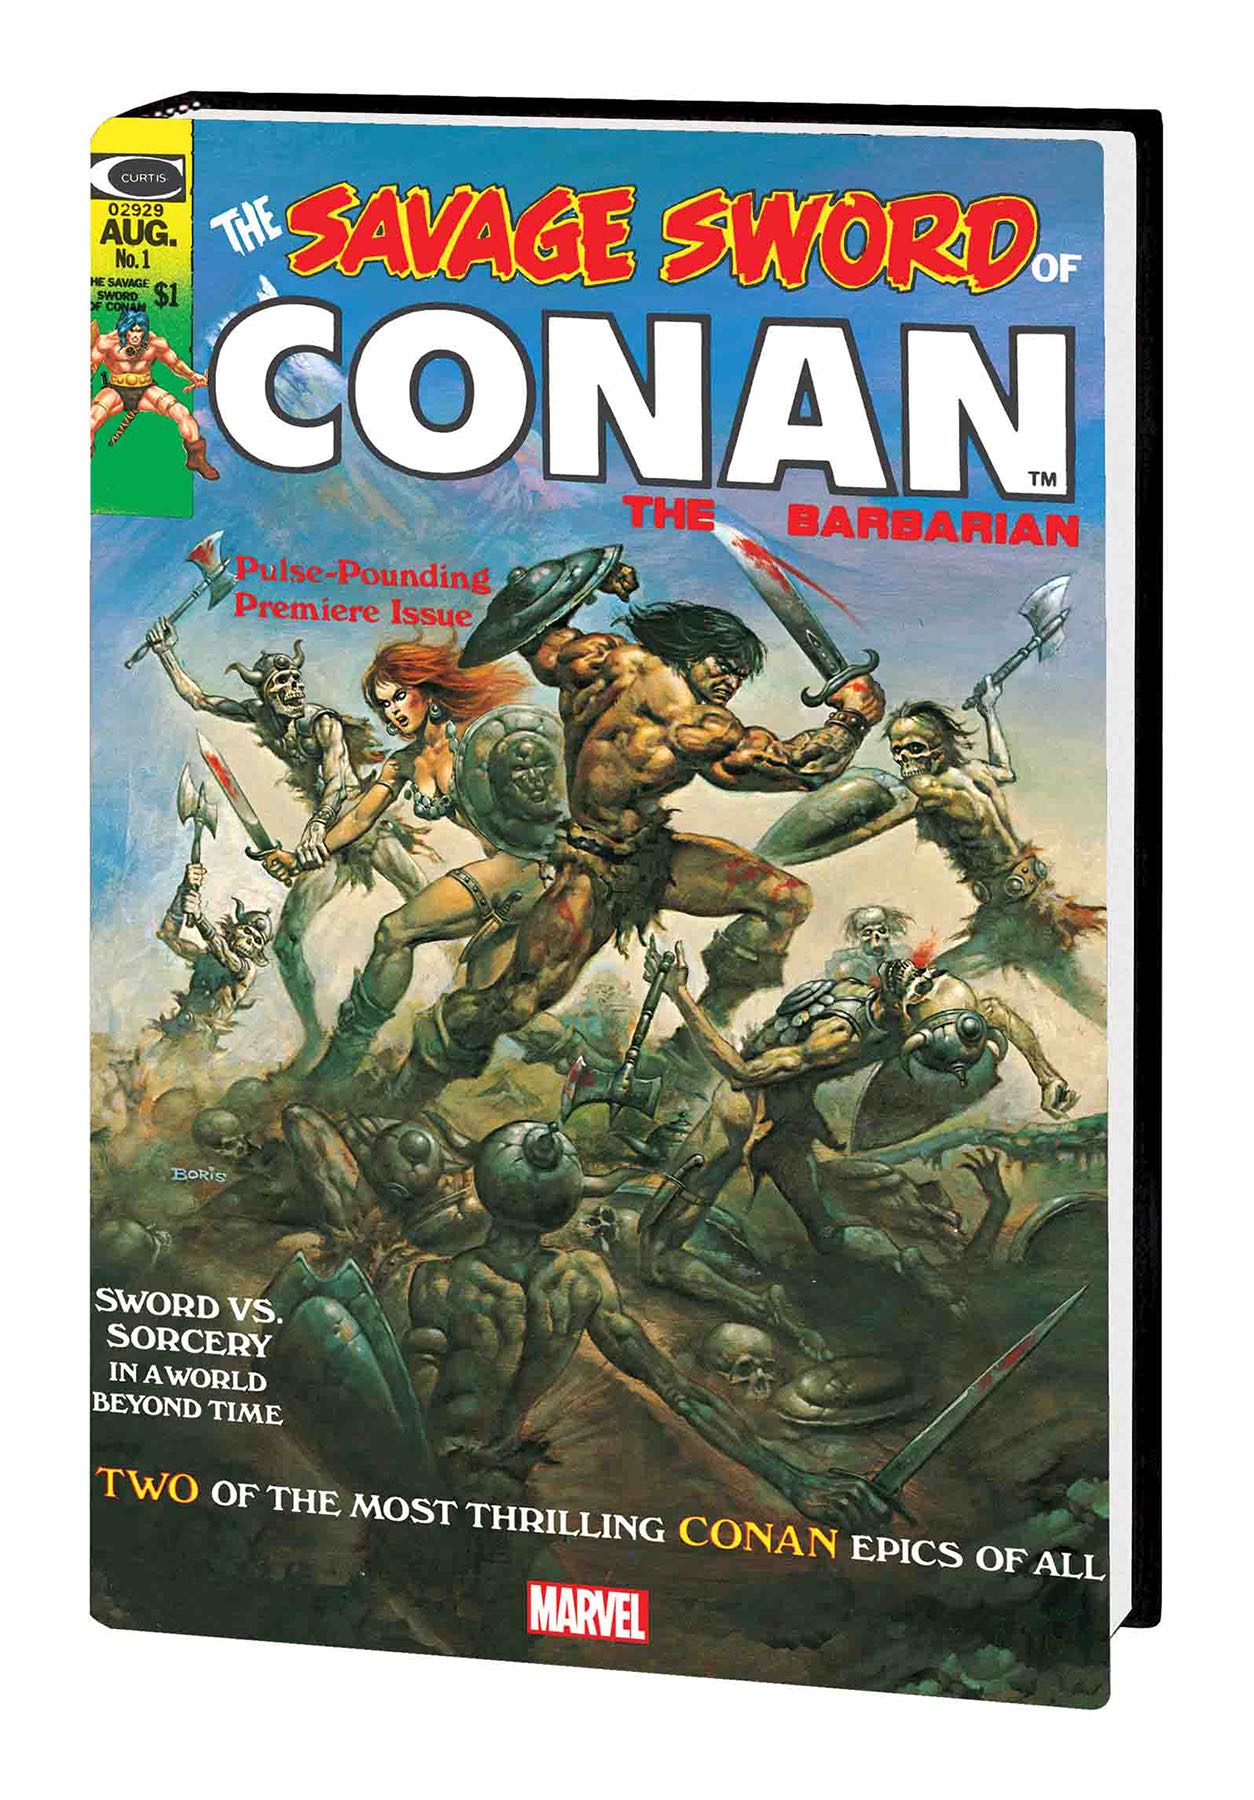 The Savage Sword of Conan, Volume 1 by Roy Thomas